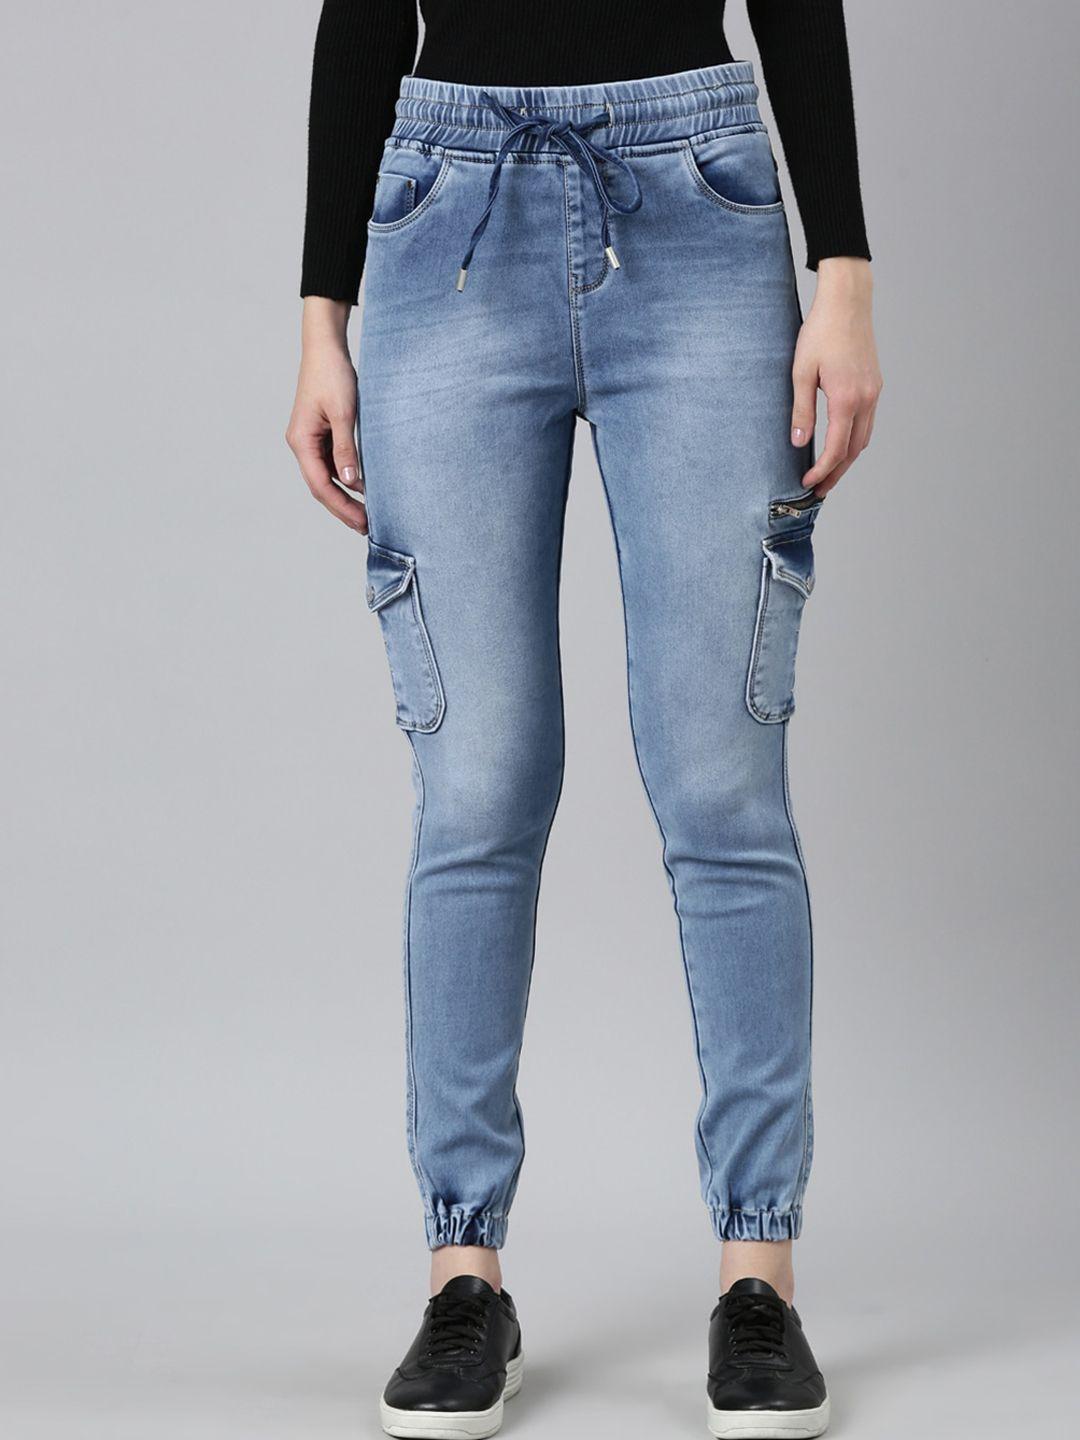 showoff-women-jean-heavy-fade-cuffed-hem-stretchable-jogger-jeans